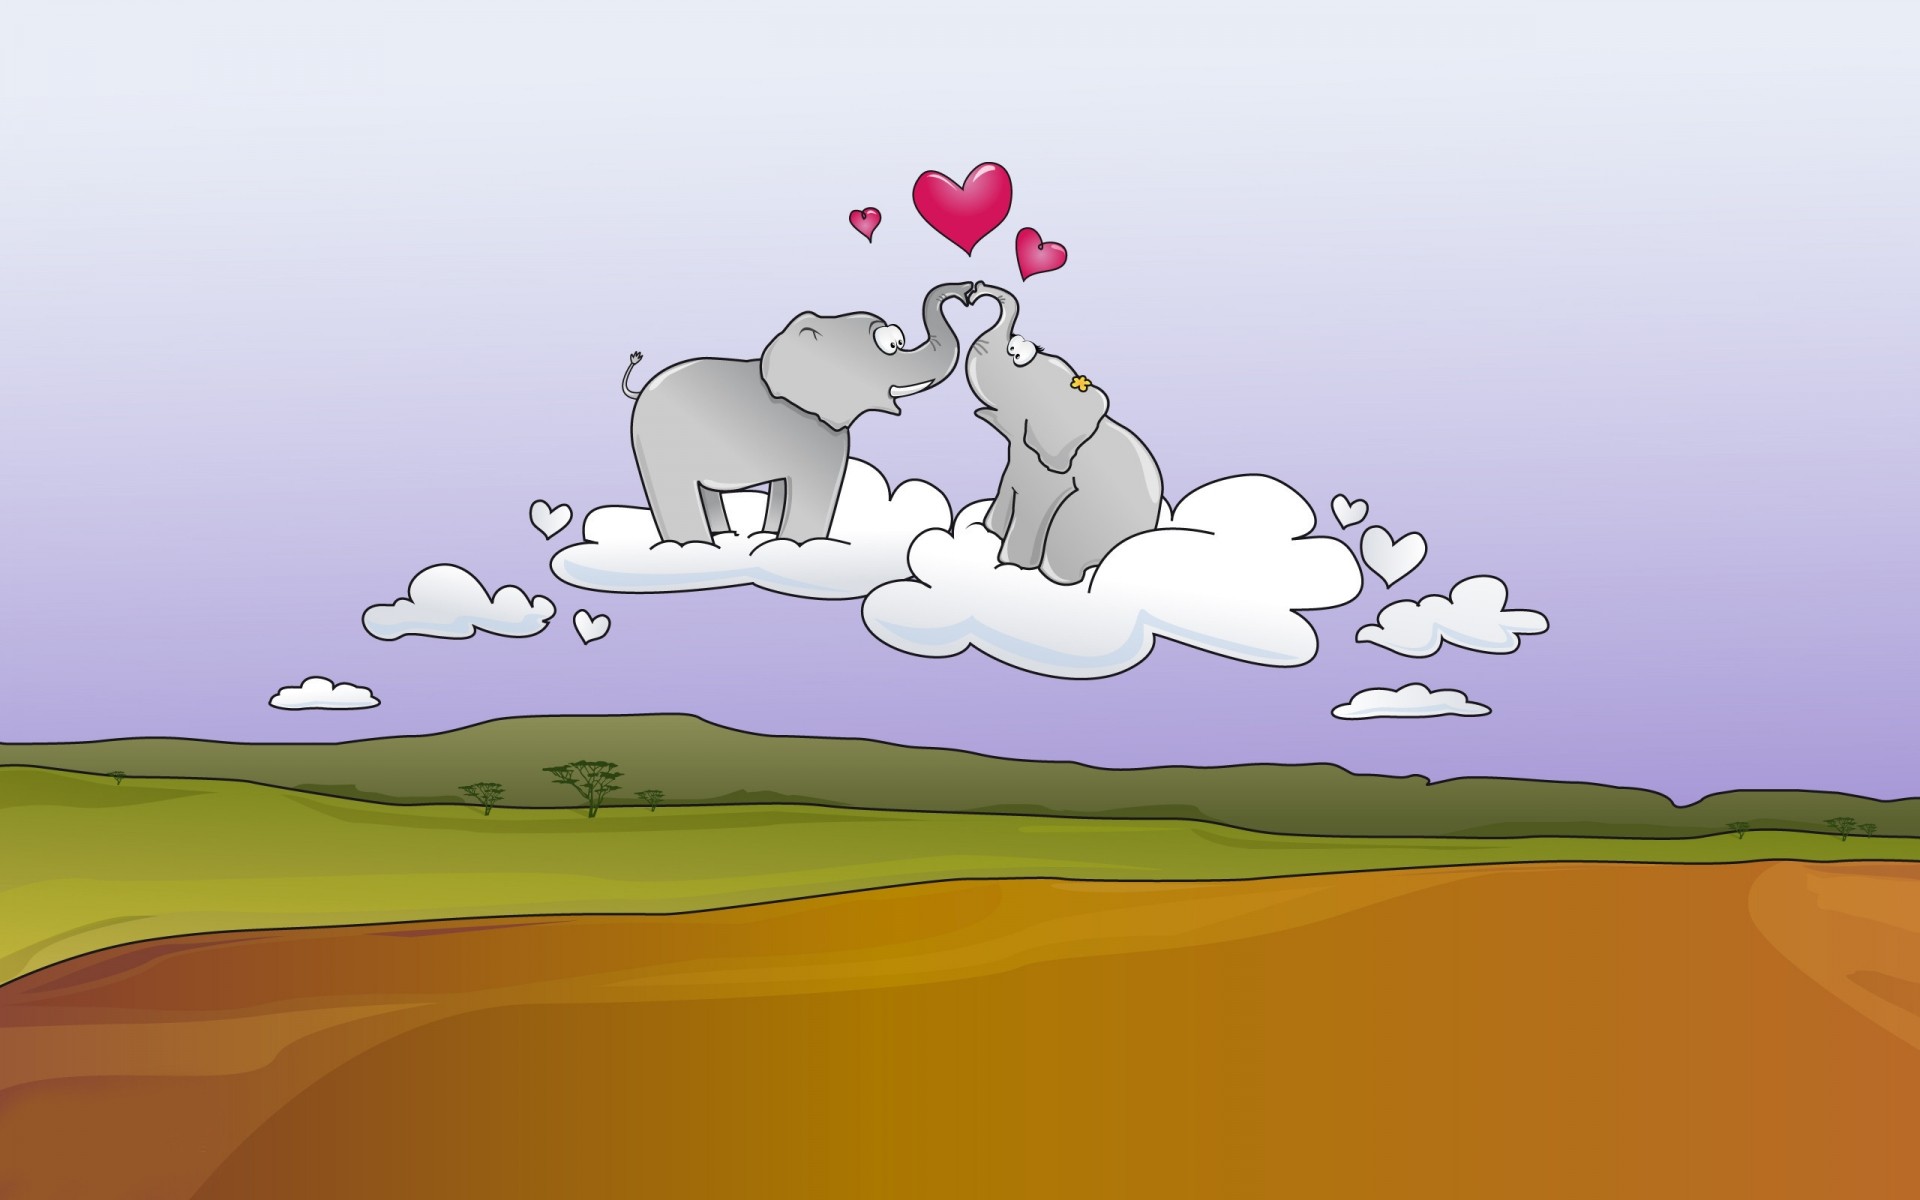 drawings illustration vector desktop graphic nature sketch color landscape sky summer art design wave elephants animals love heart clouds